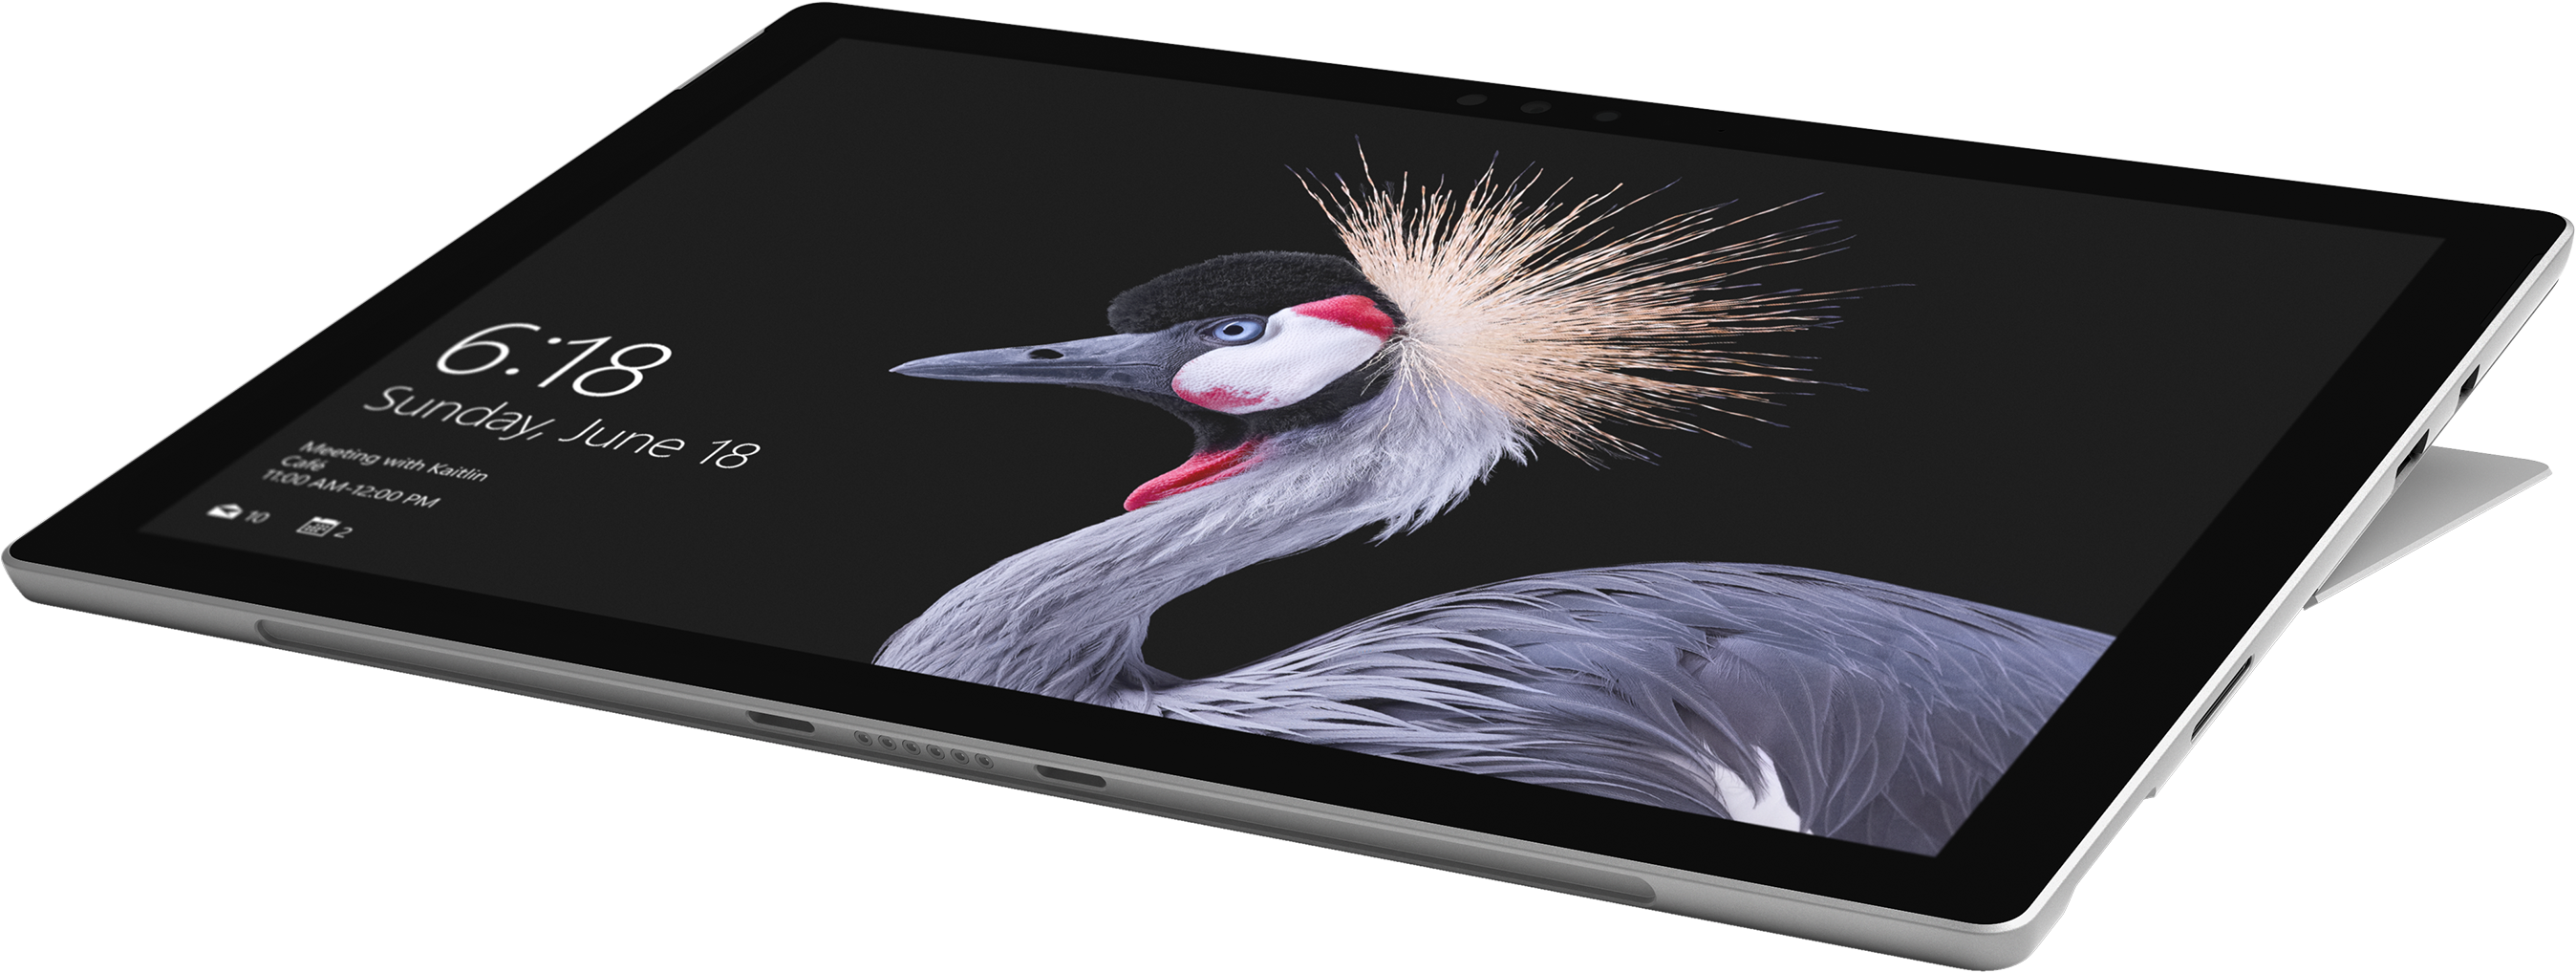 Surface Pro (第 5 世代) - 最新のLTE 256GB / Intel Core i5 / 8GB RAM(Microsoft)格安バーゲン一覧